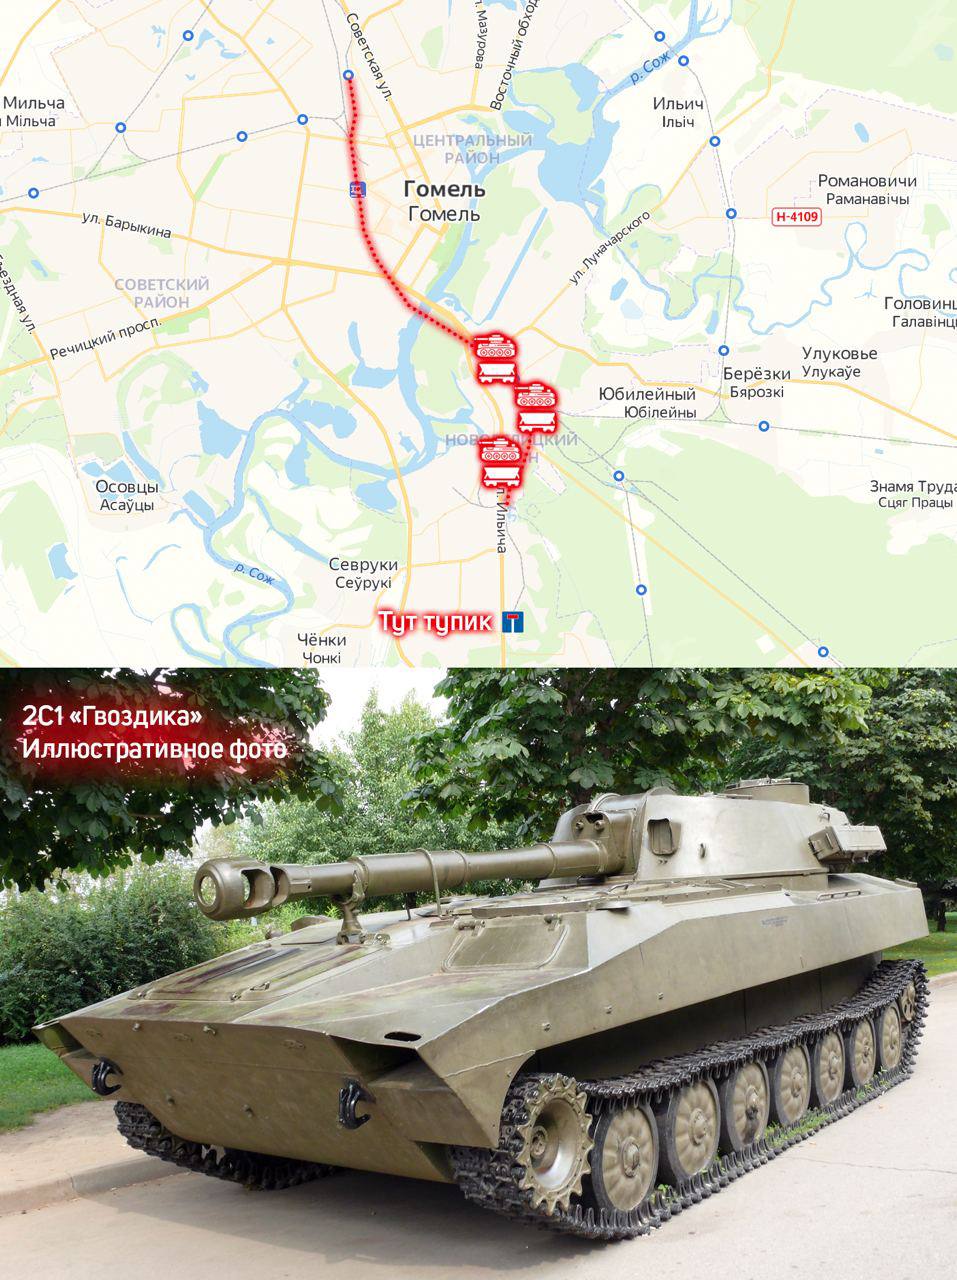 In Belarus An Artillery And Tanks Echelon Spotted 30km From Ukraine’s Border, Defense Express, war in Ukraine, Russian-Ukrainian war